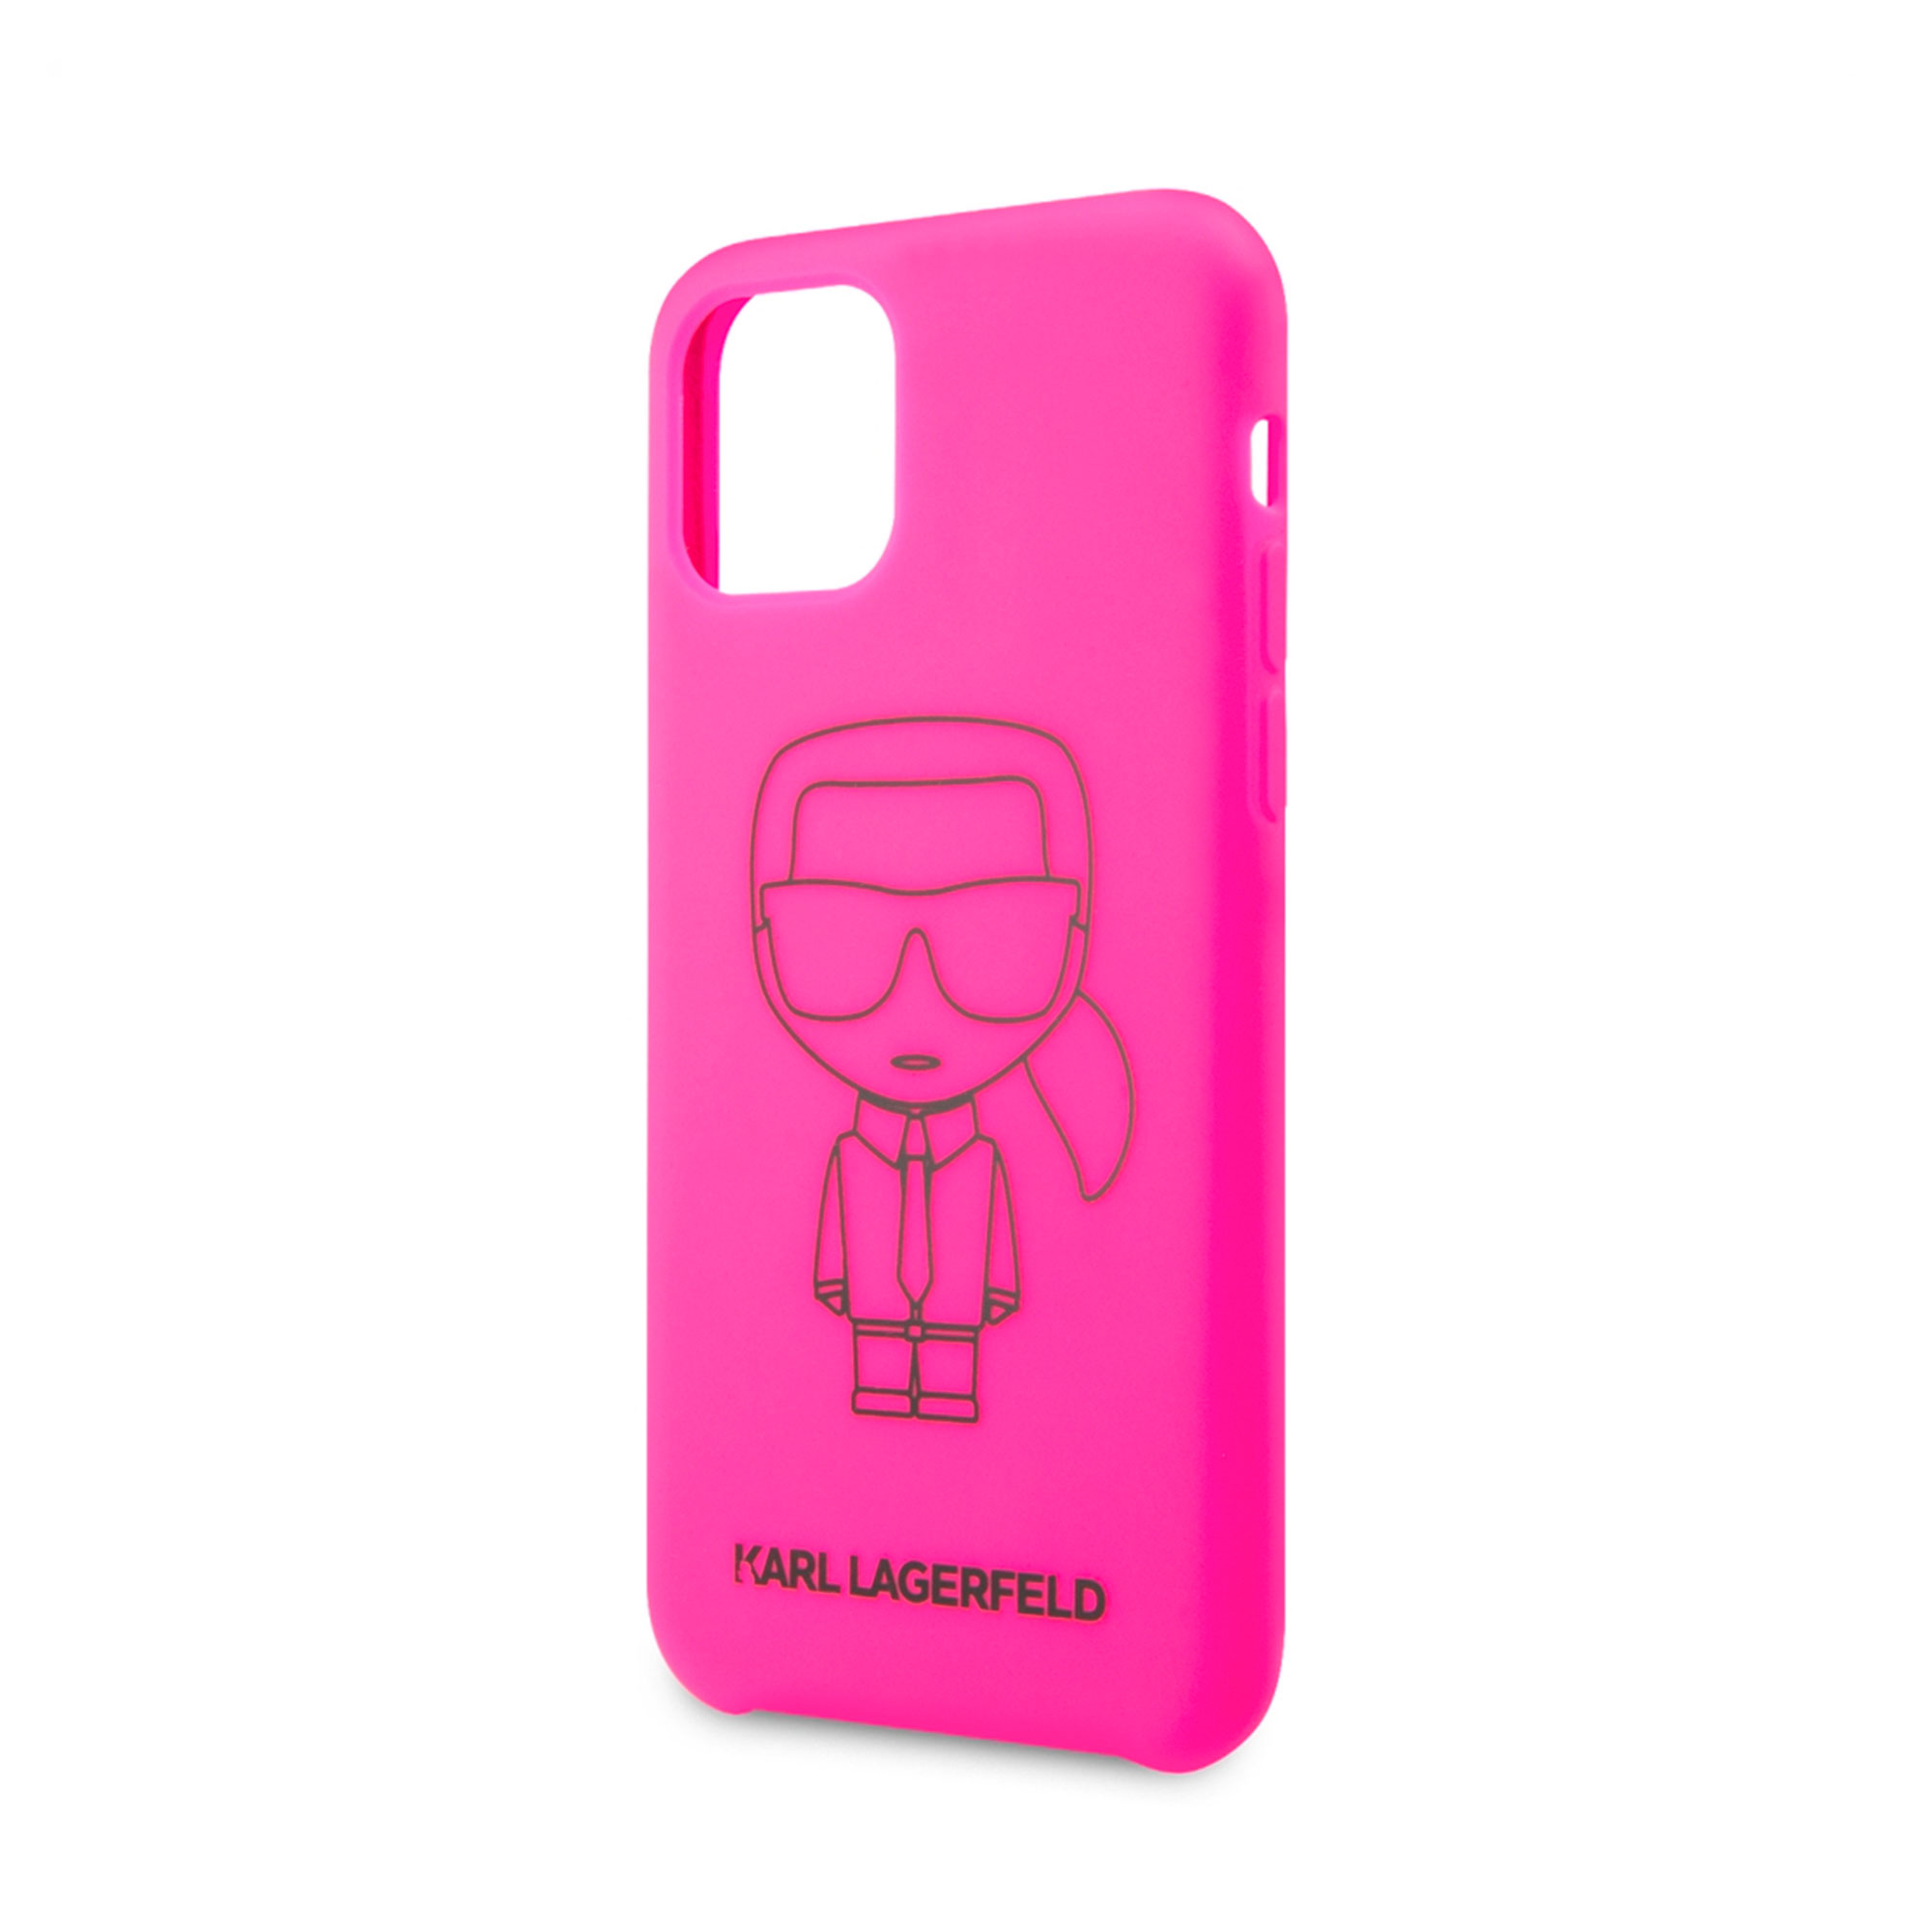 Чехол для смартфона Lagerfeld для iPhone 11 Pro Liquid silicone Ikonik outlines Hard Pink/Black